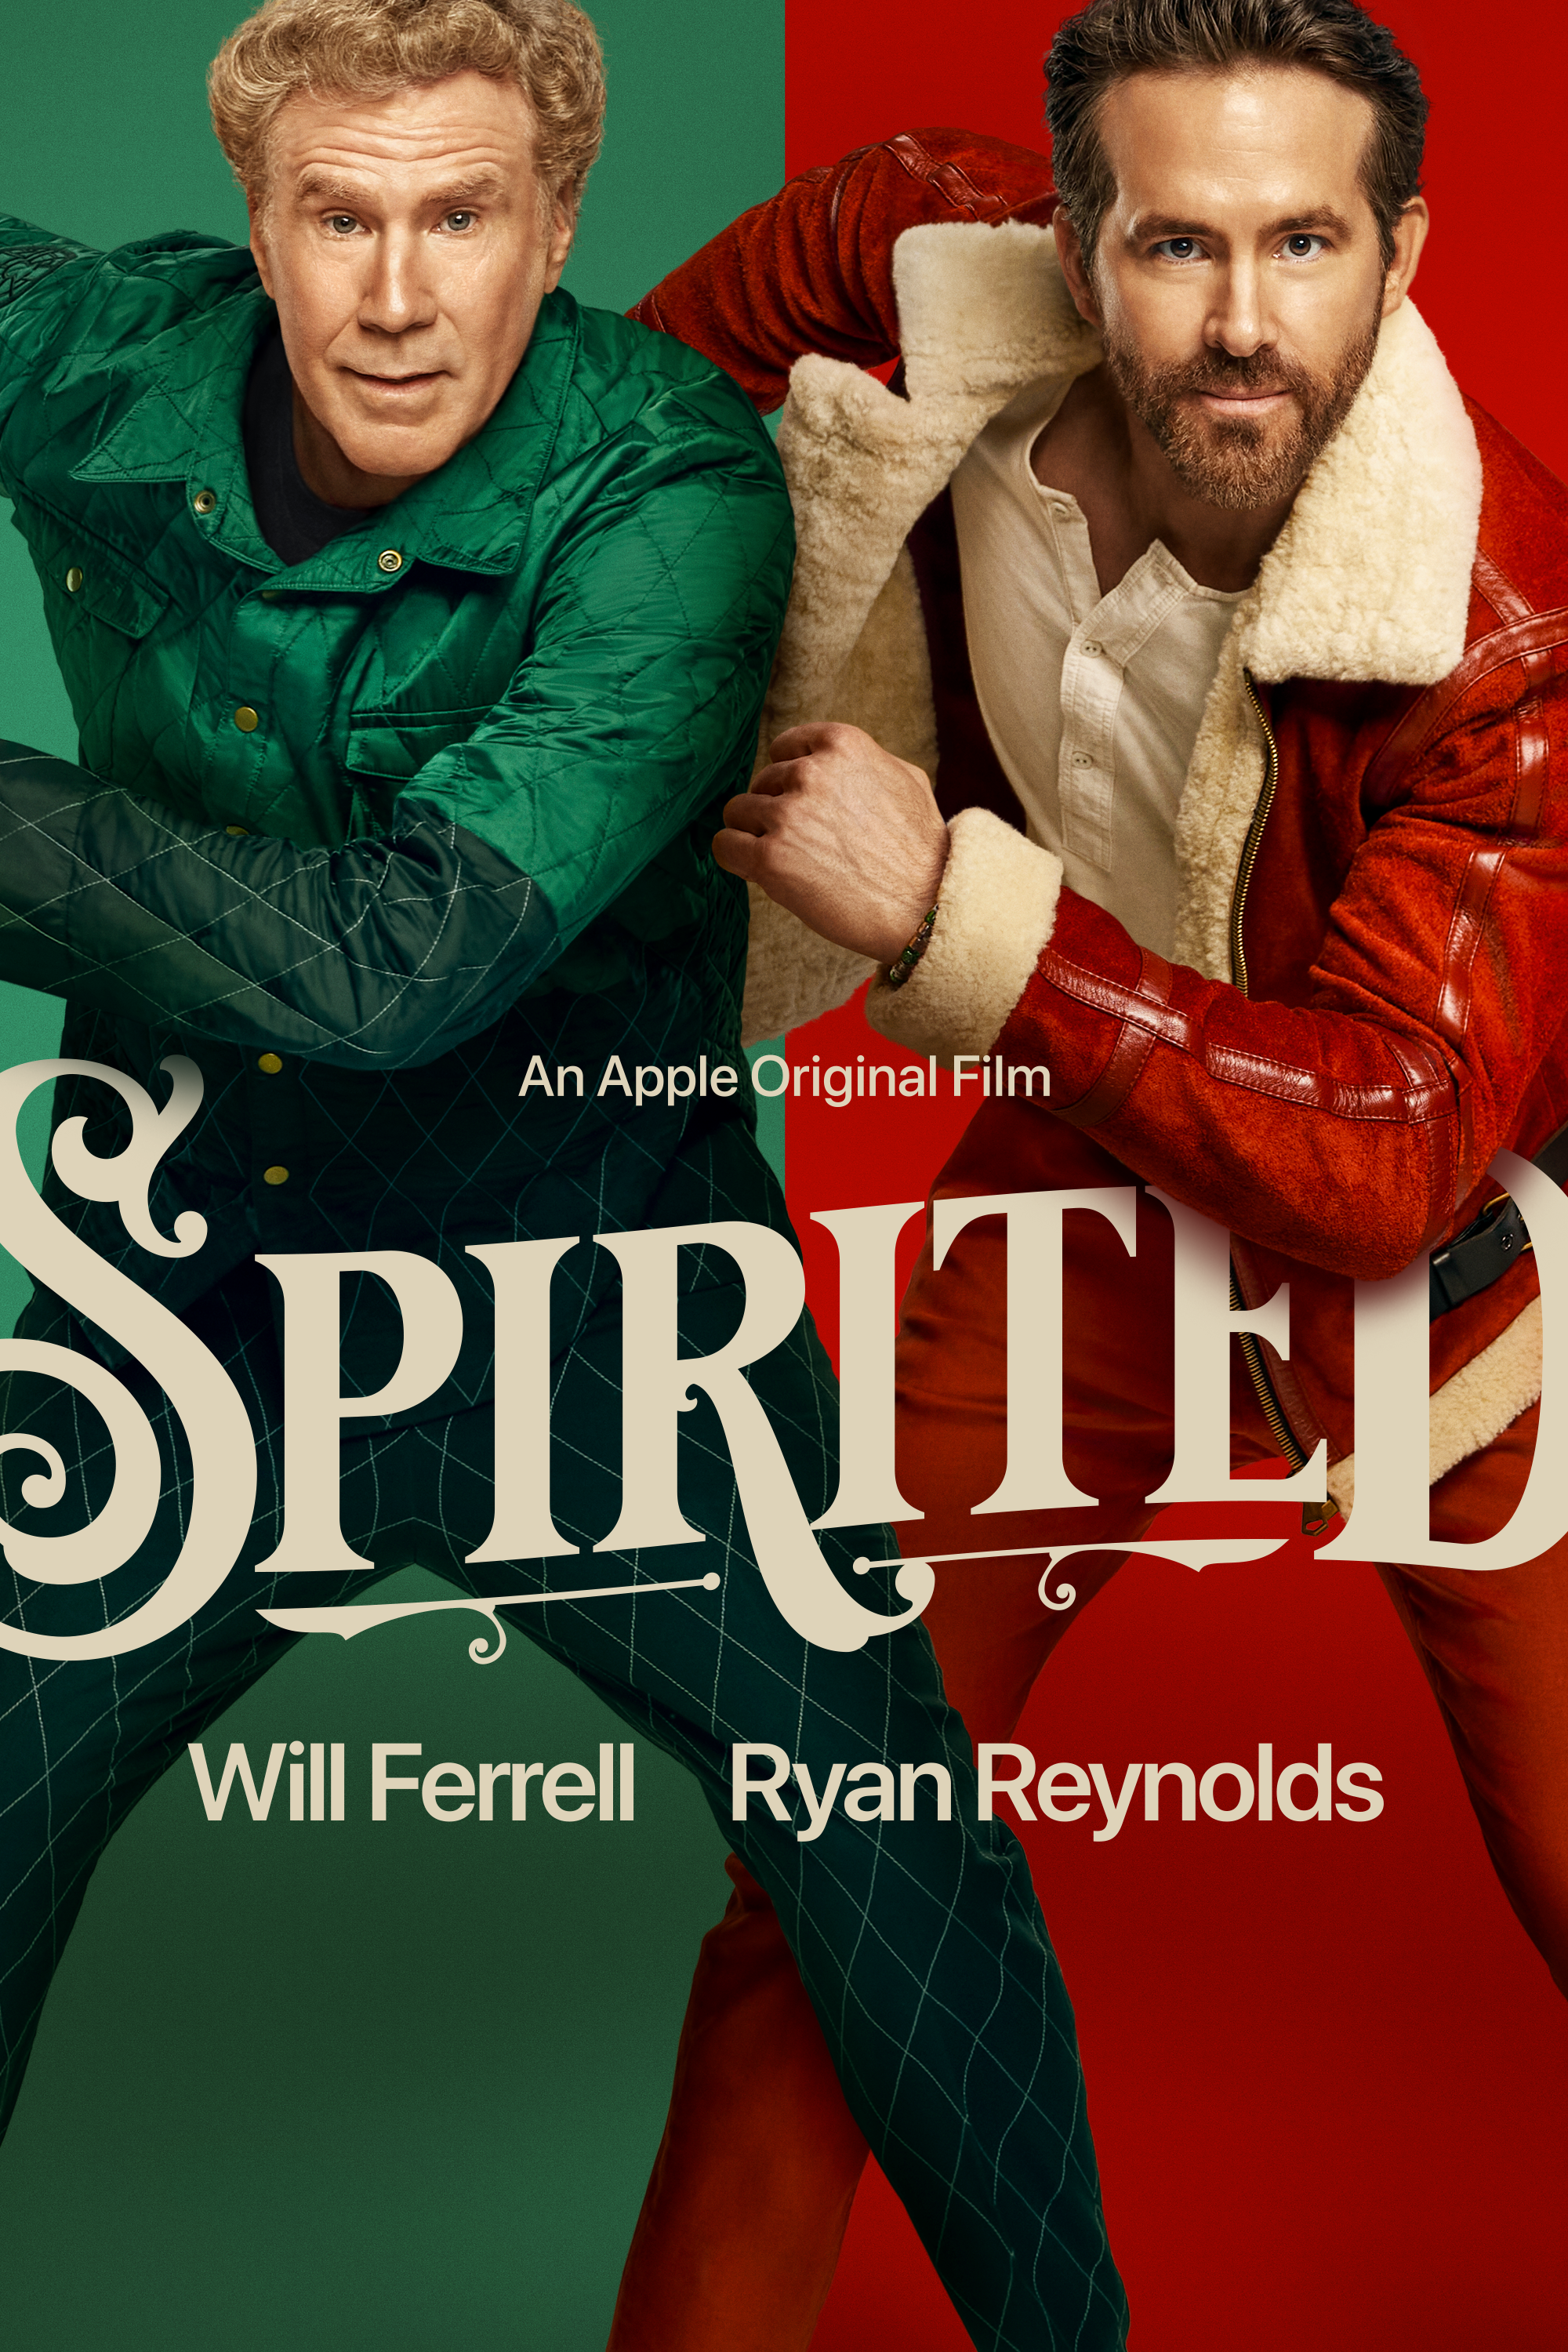 Ryan Reynolds' best and worst movies ranked - Spirited movie